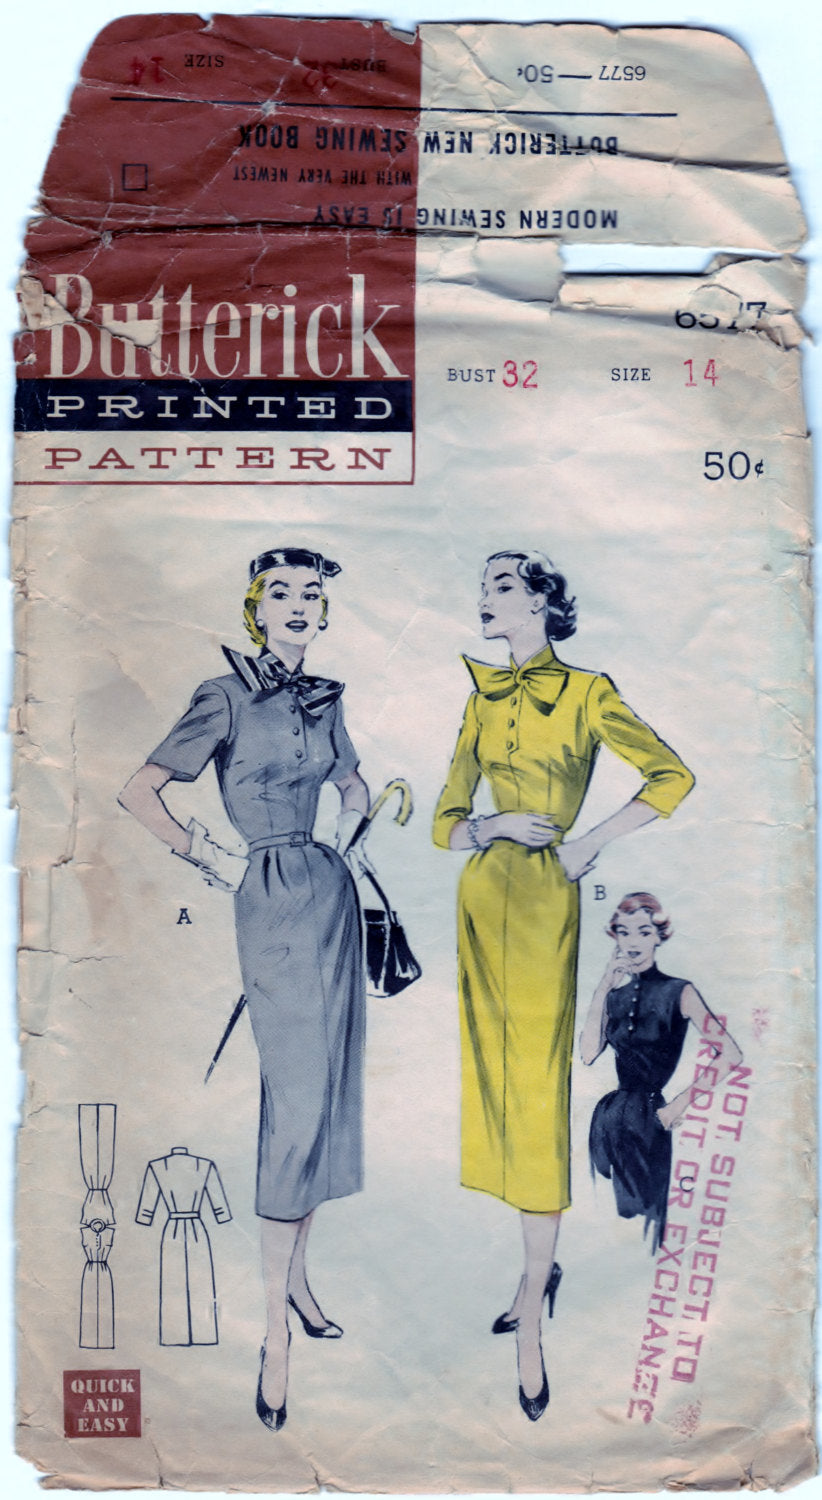 Butterick 6577 Pattern Vintage Tailored Dress